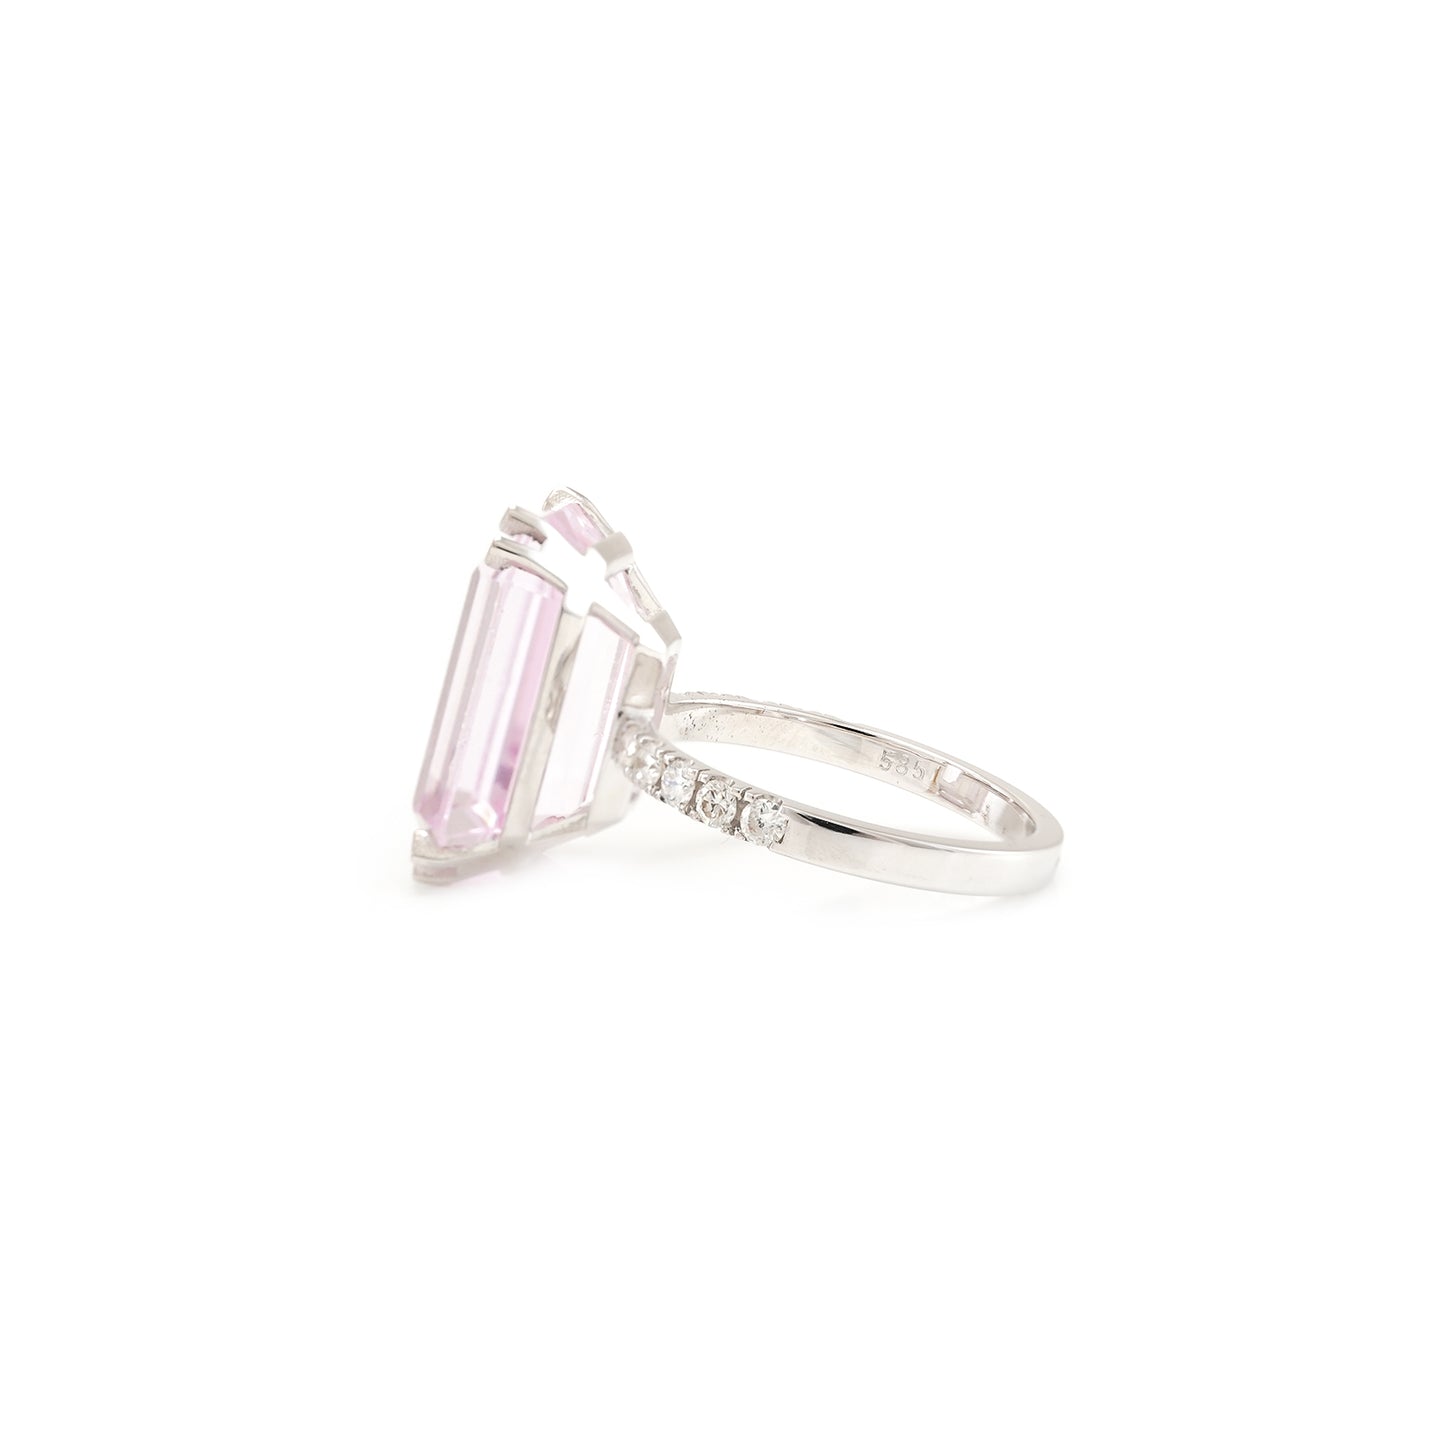 Diamond ring with pink gemstone in white gold 585 14K gold ring diamond ring